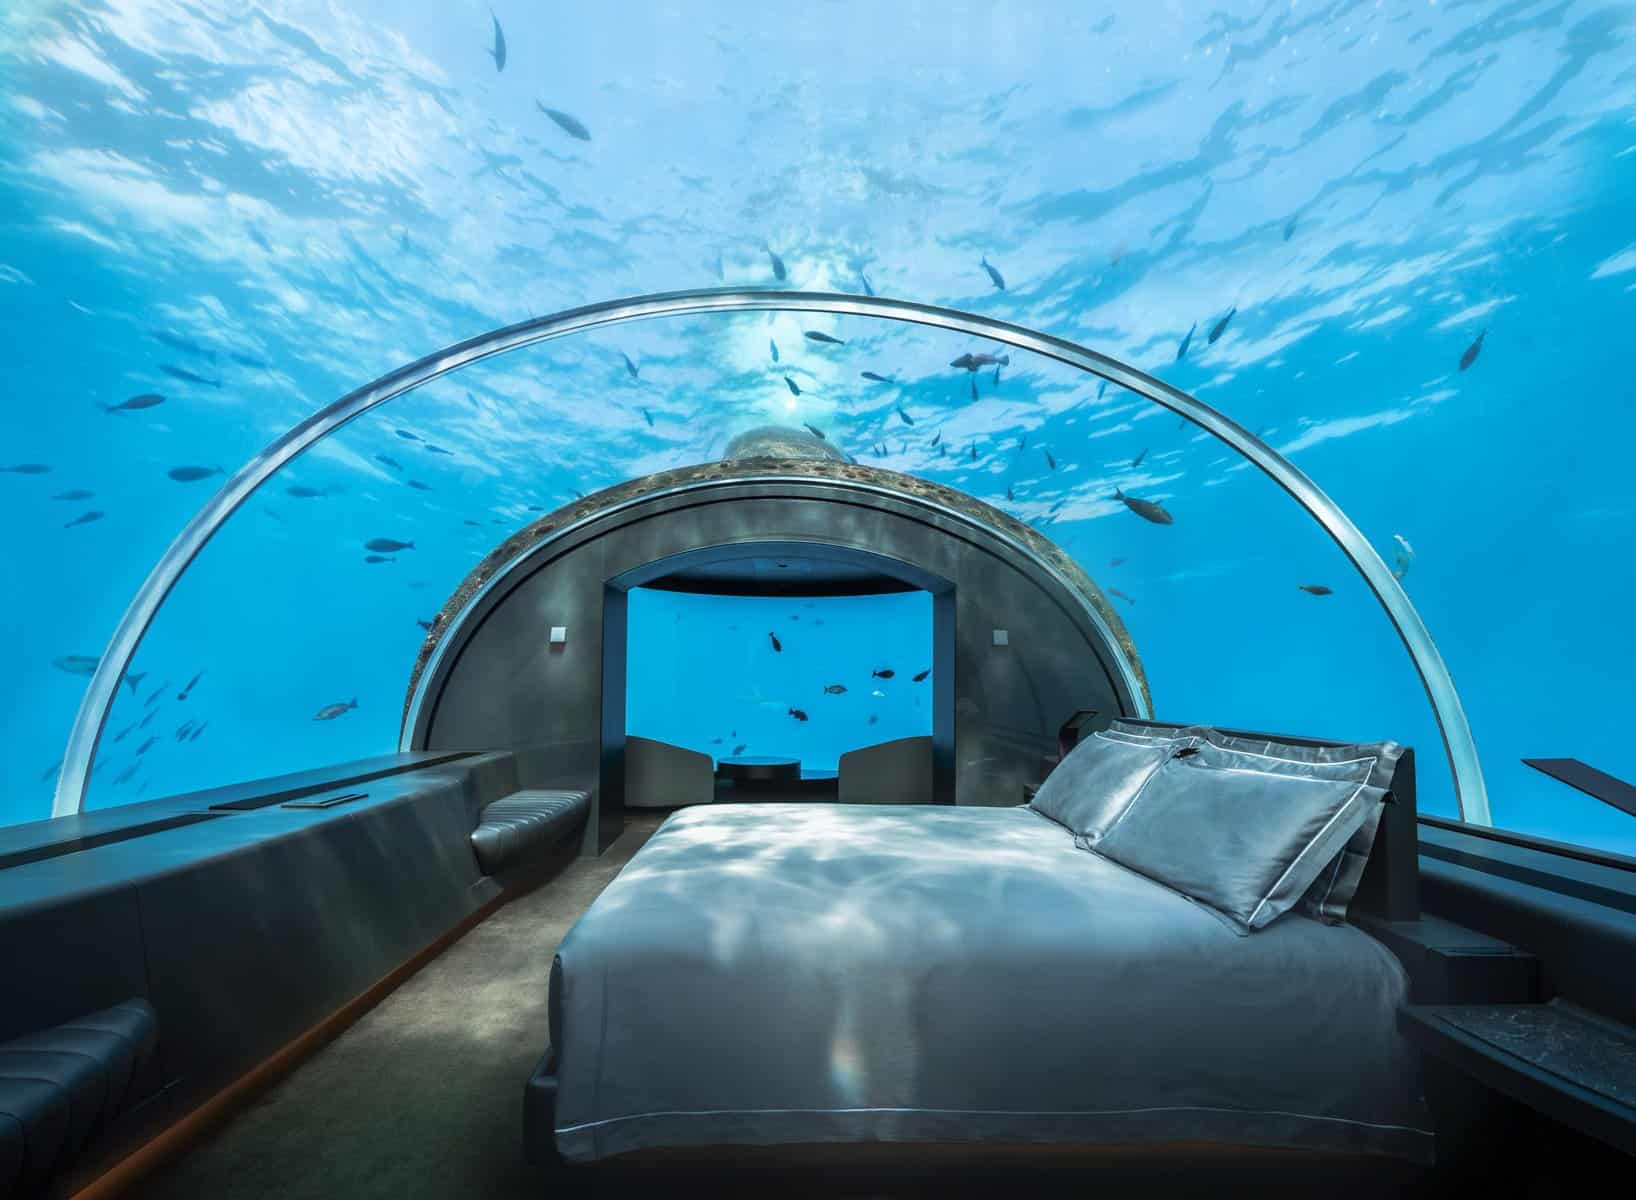 The Muraka Suite at The Conrad Maldives bedroom